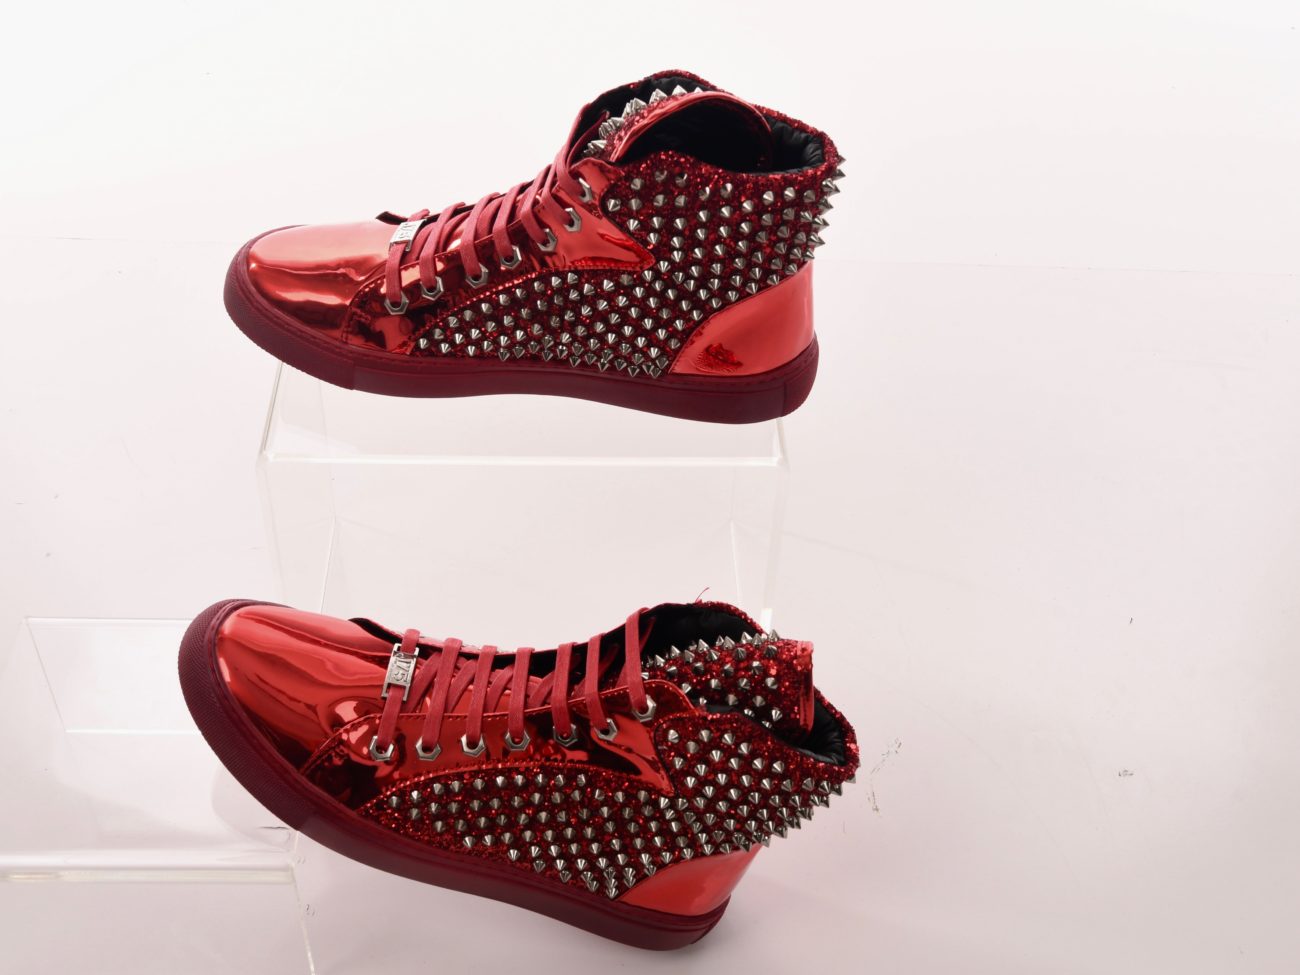 red high top sneakers mens